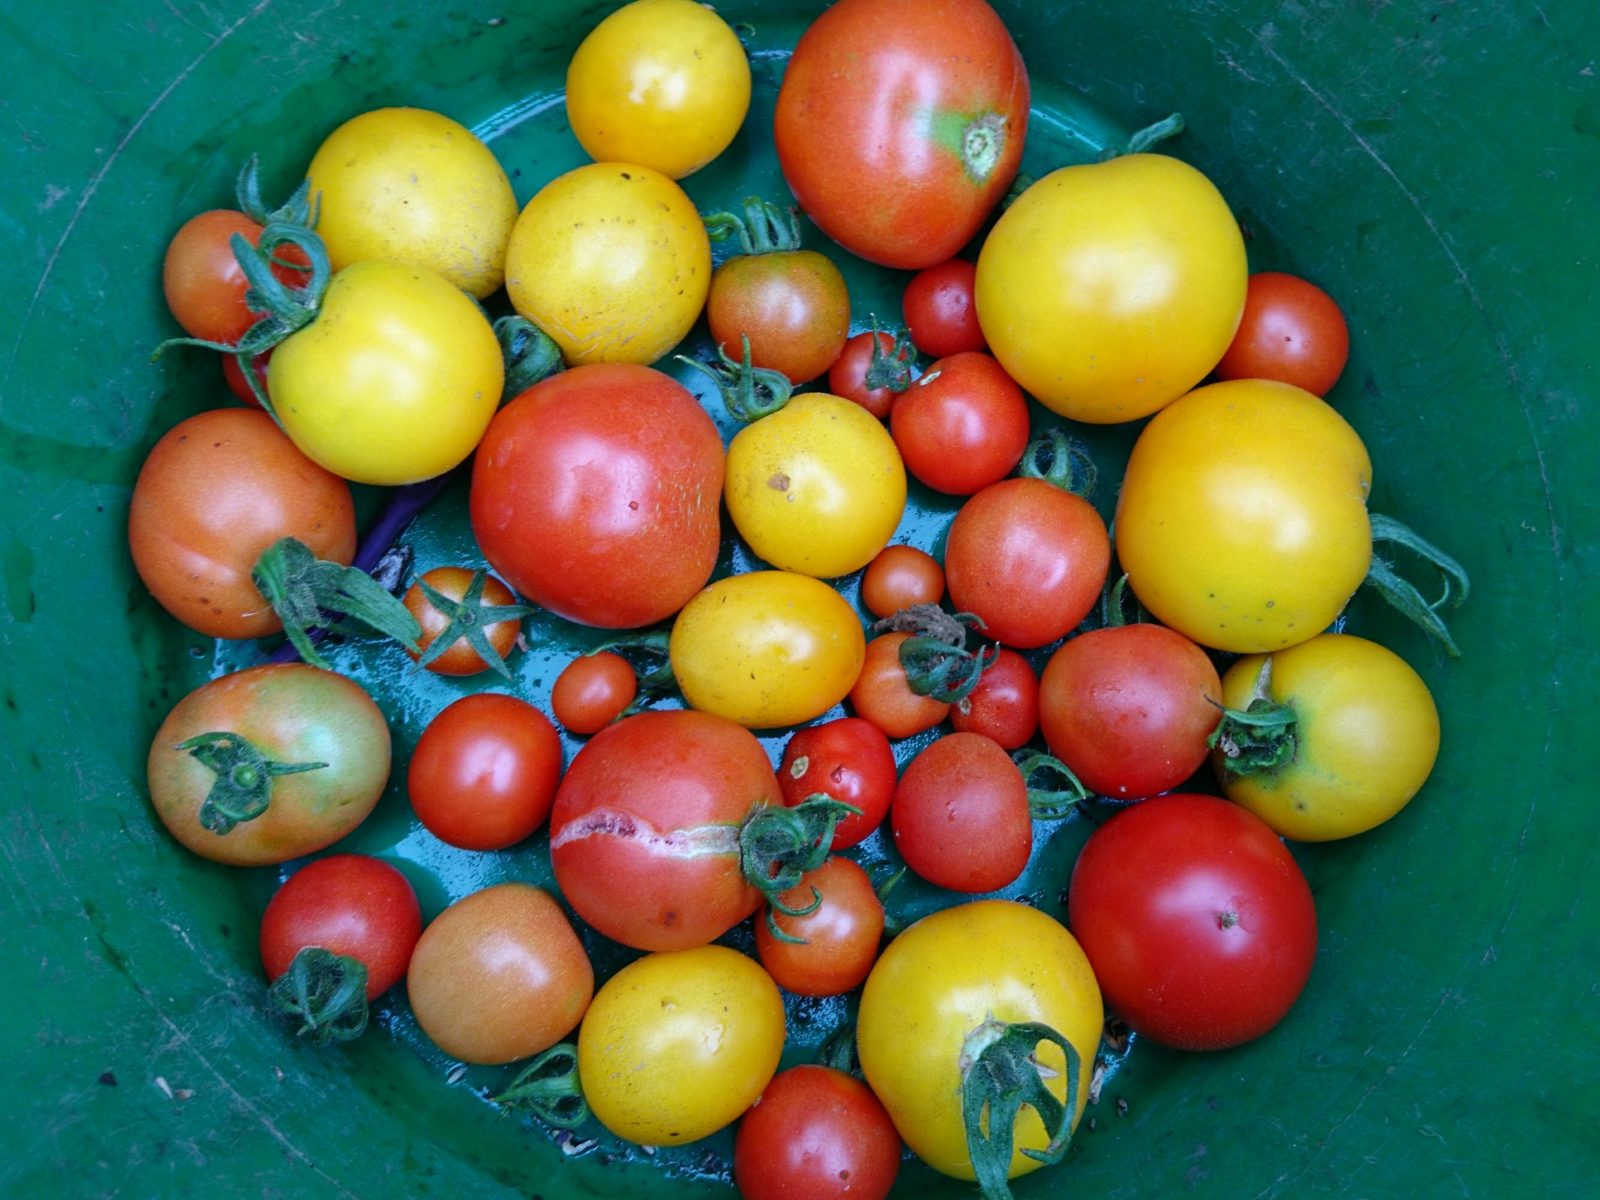 tomatoes-green-trug-camelcsa-280717